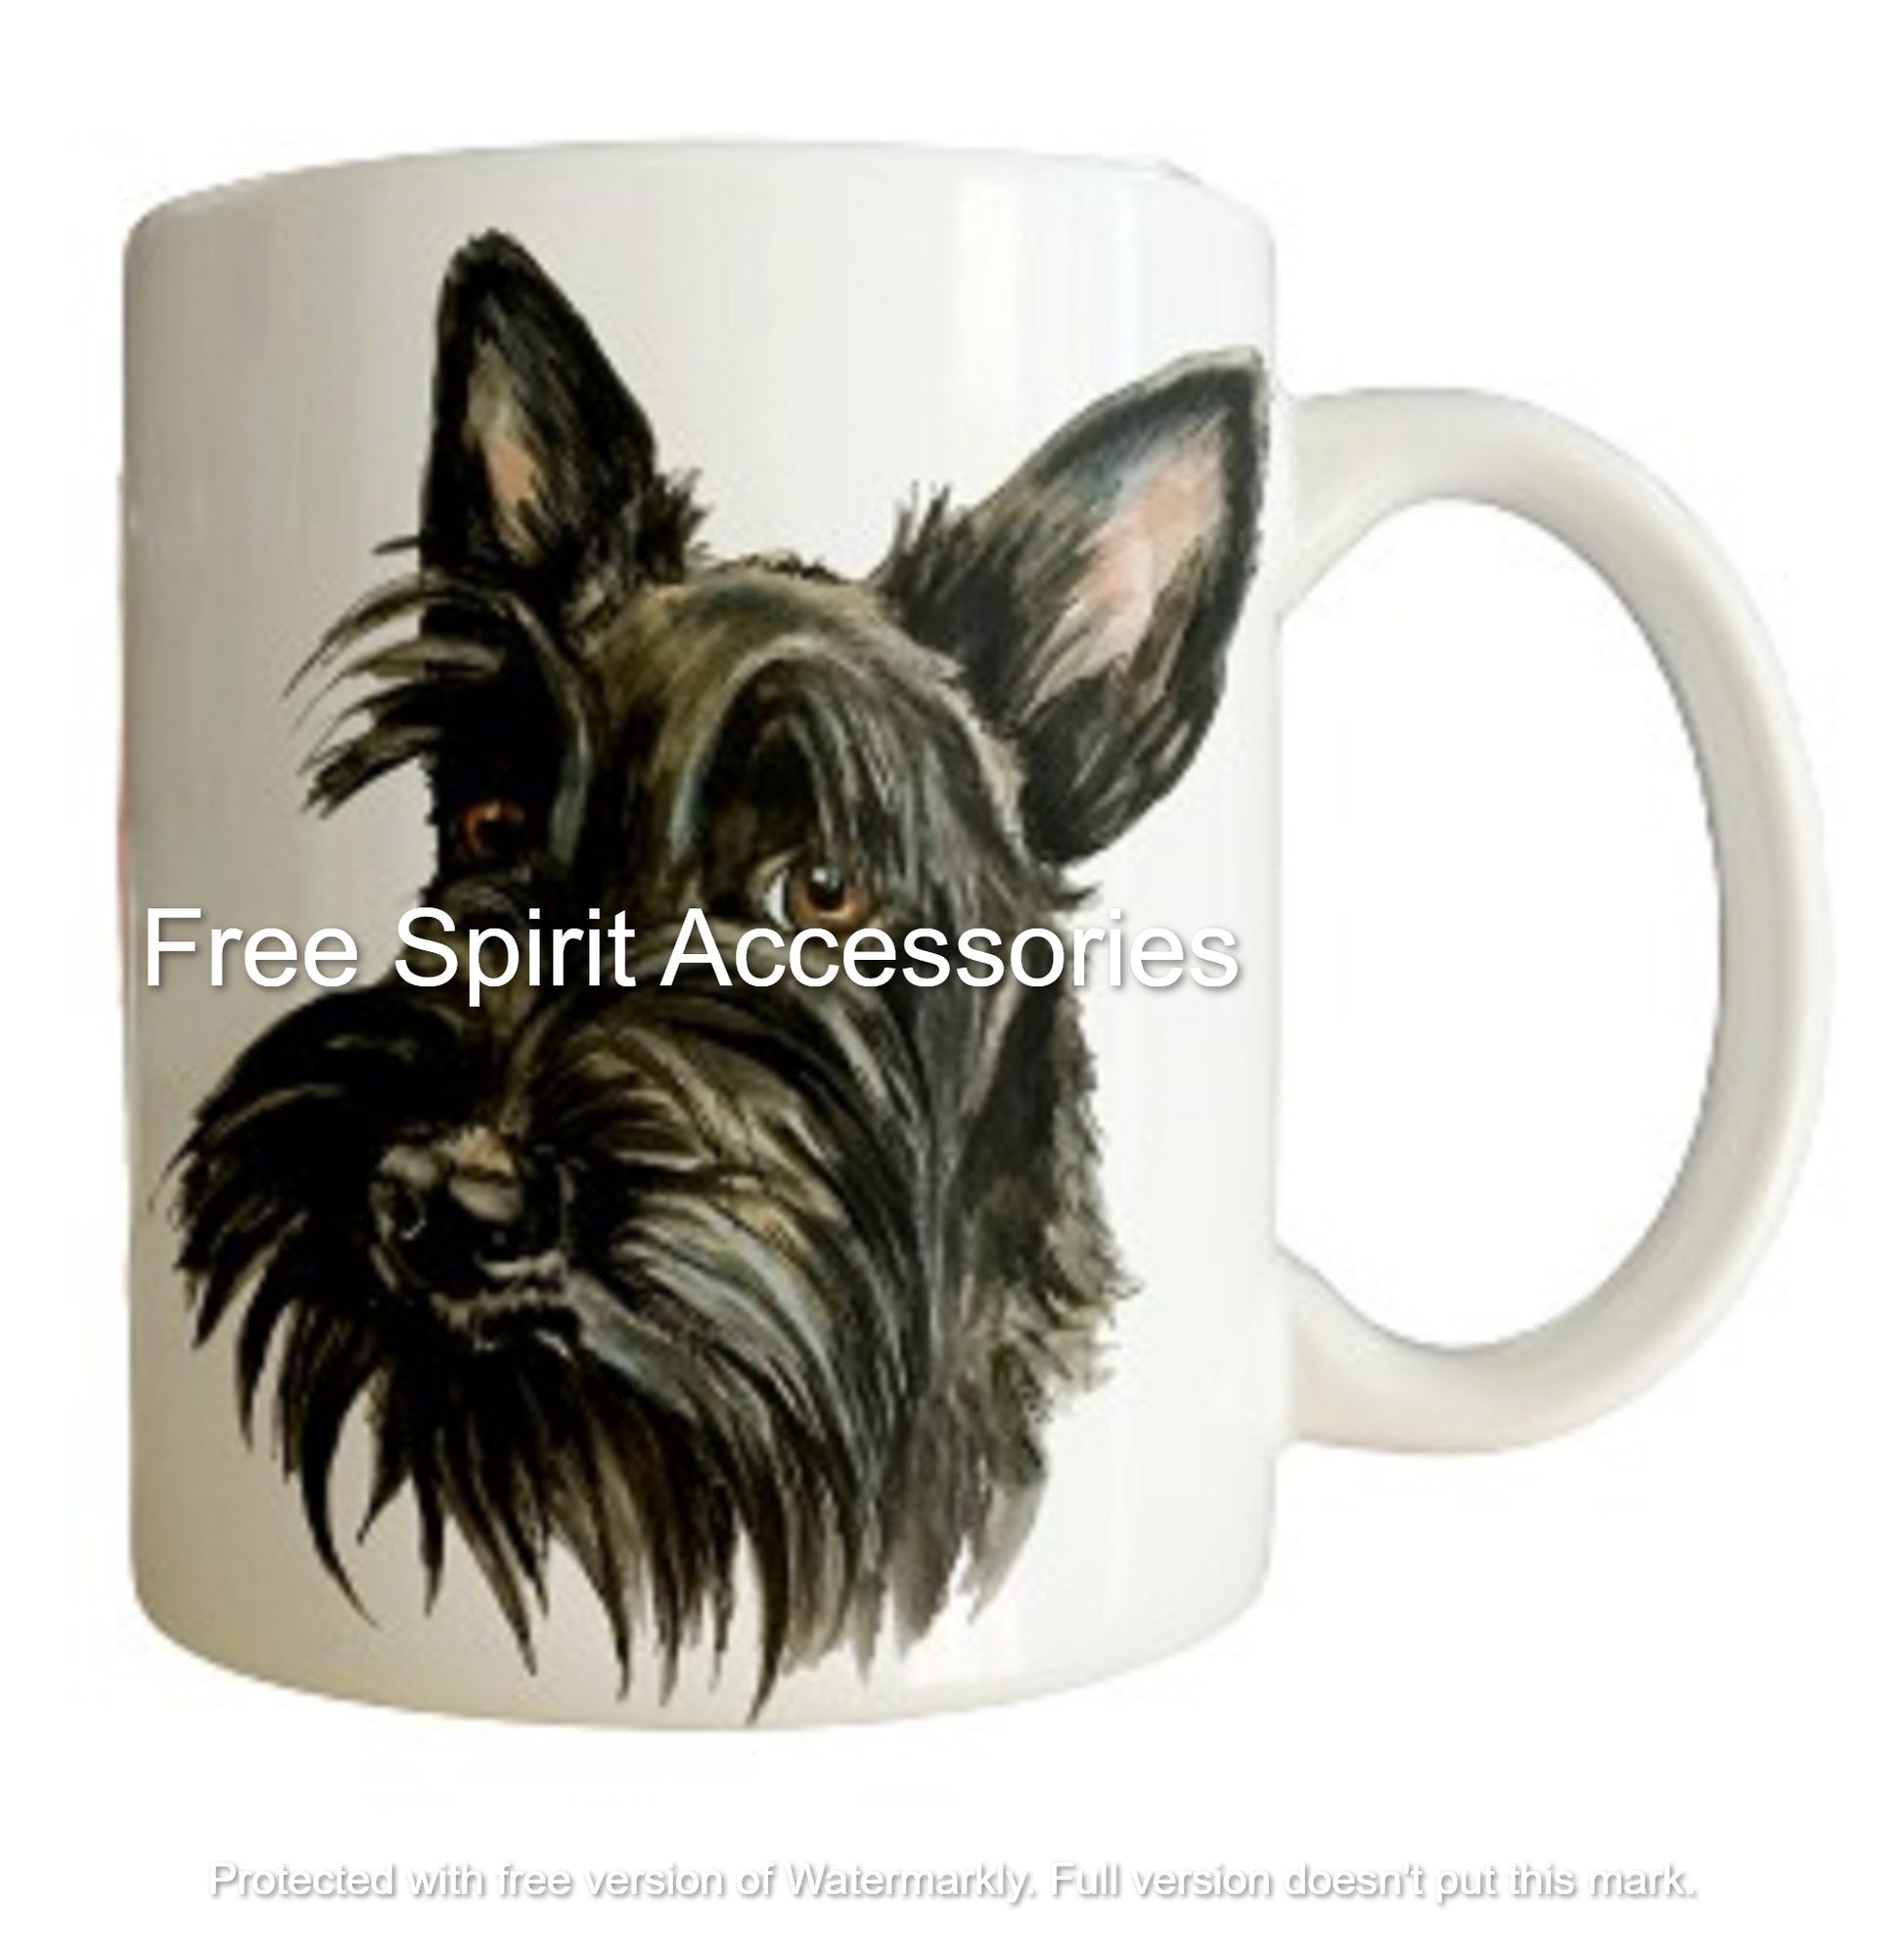  Black Scottie Dog Coffee Mug by Free Spirit Accessories sold by Free Spirit Accessories